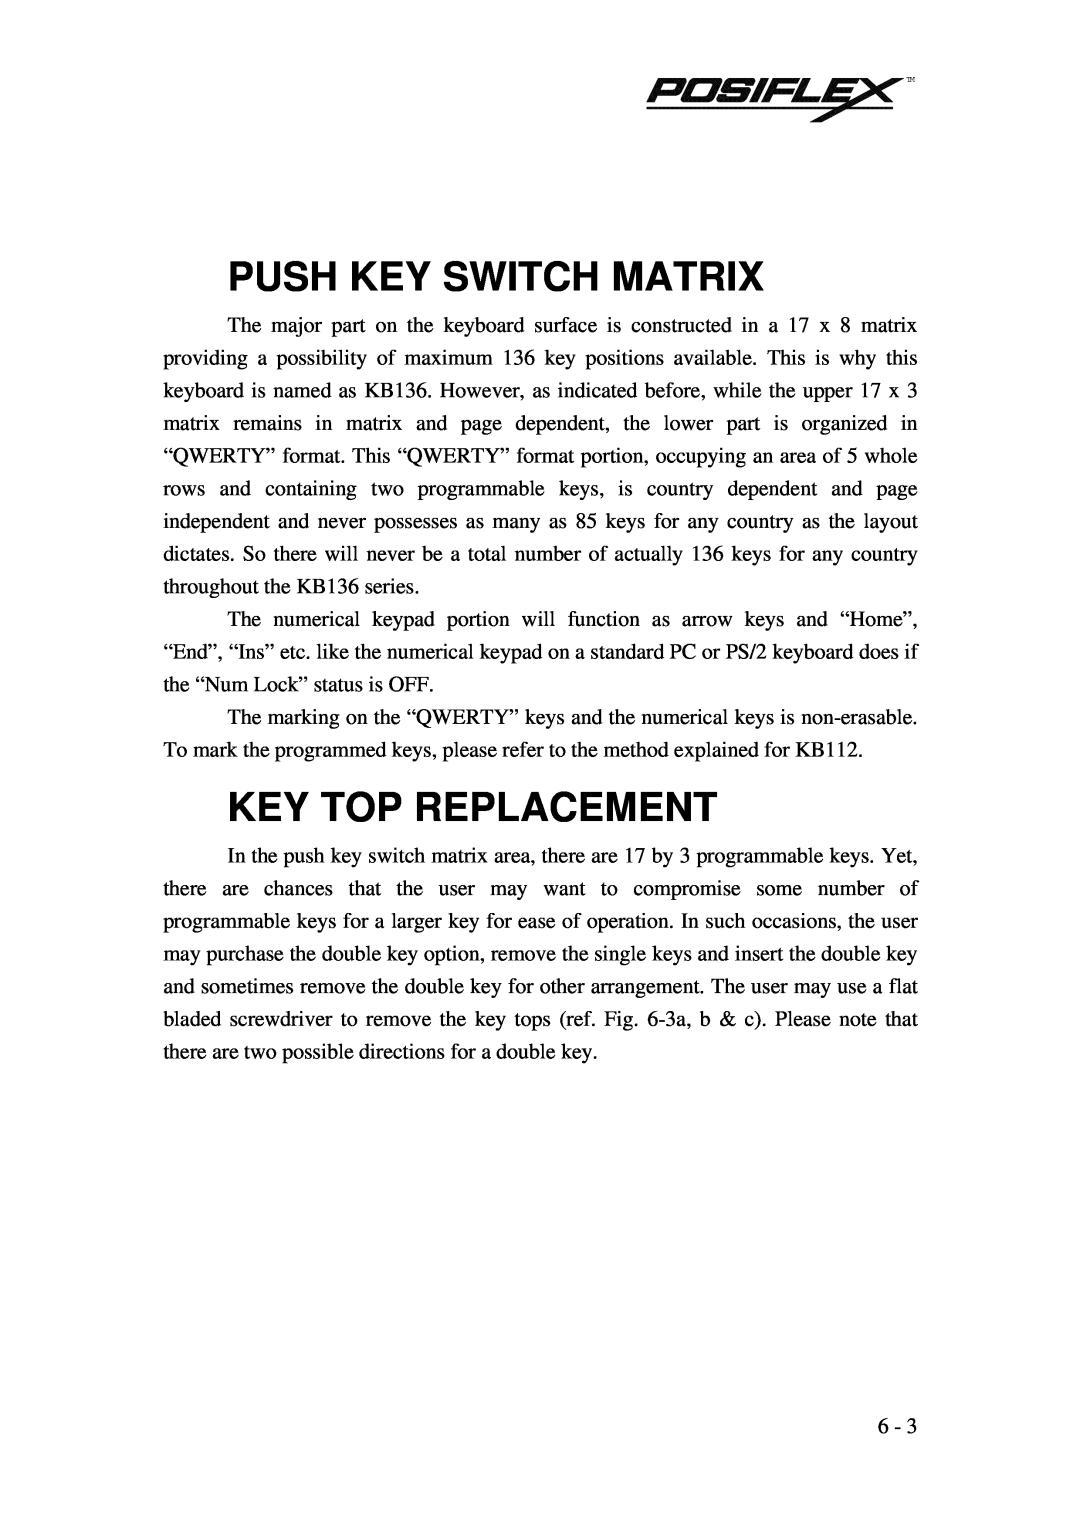 POSIFLEX Business Machines PST KB136 manual Push Key Switch Matrix, Key Top Replacement 